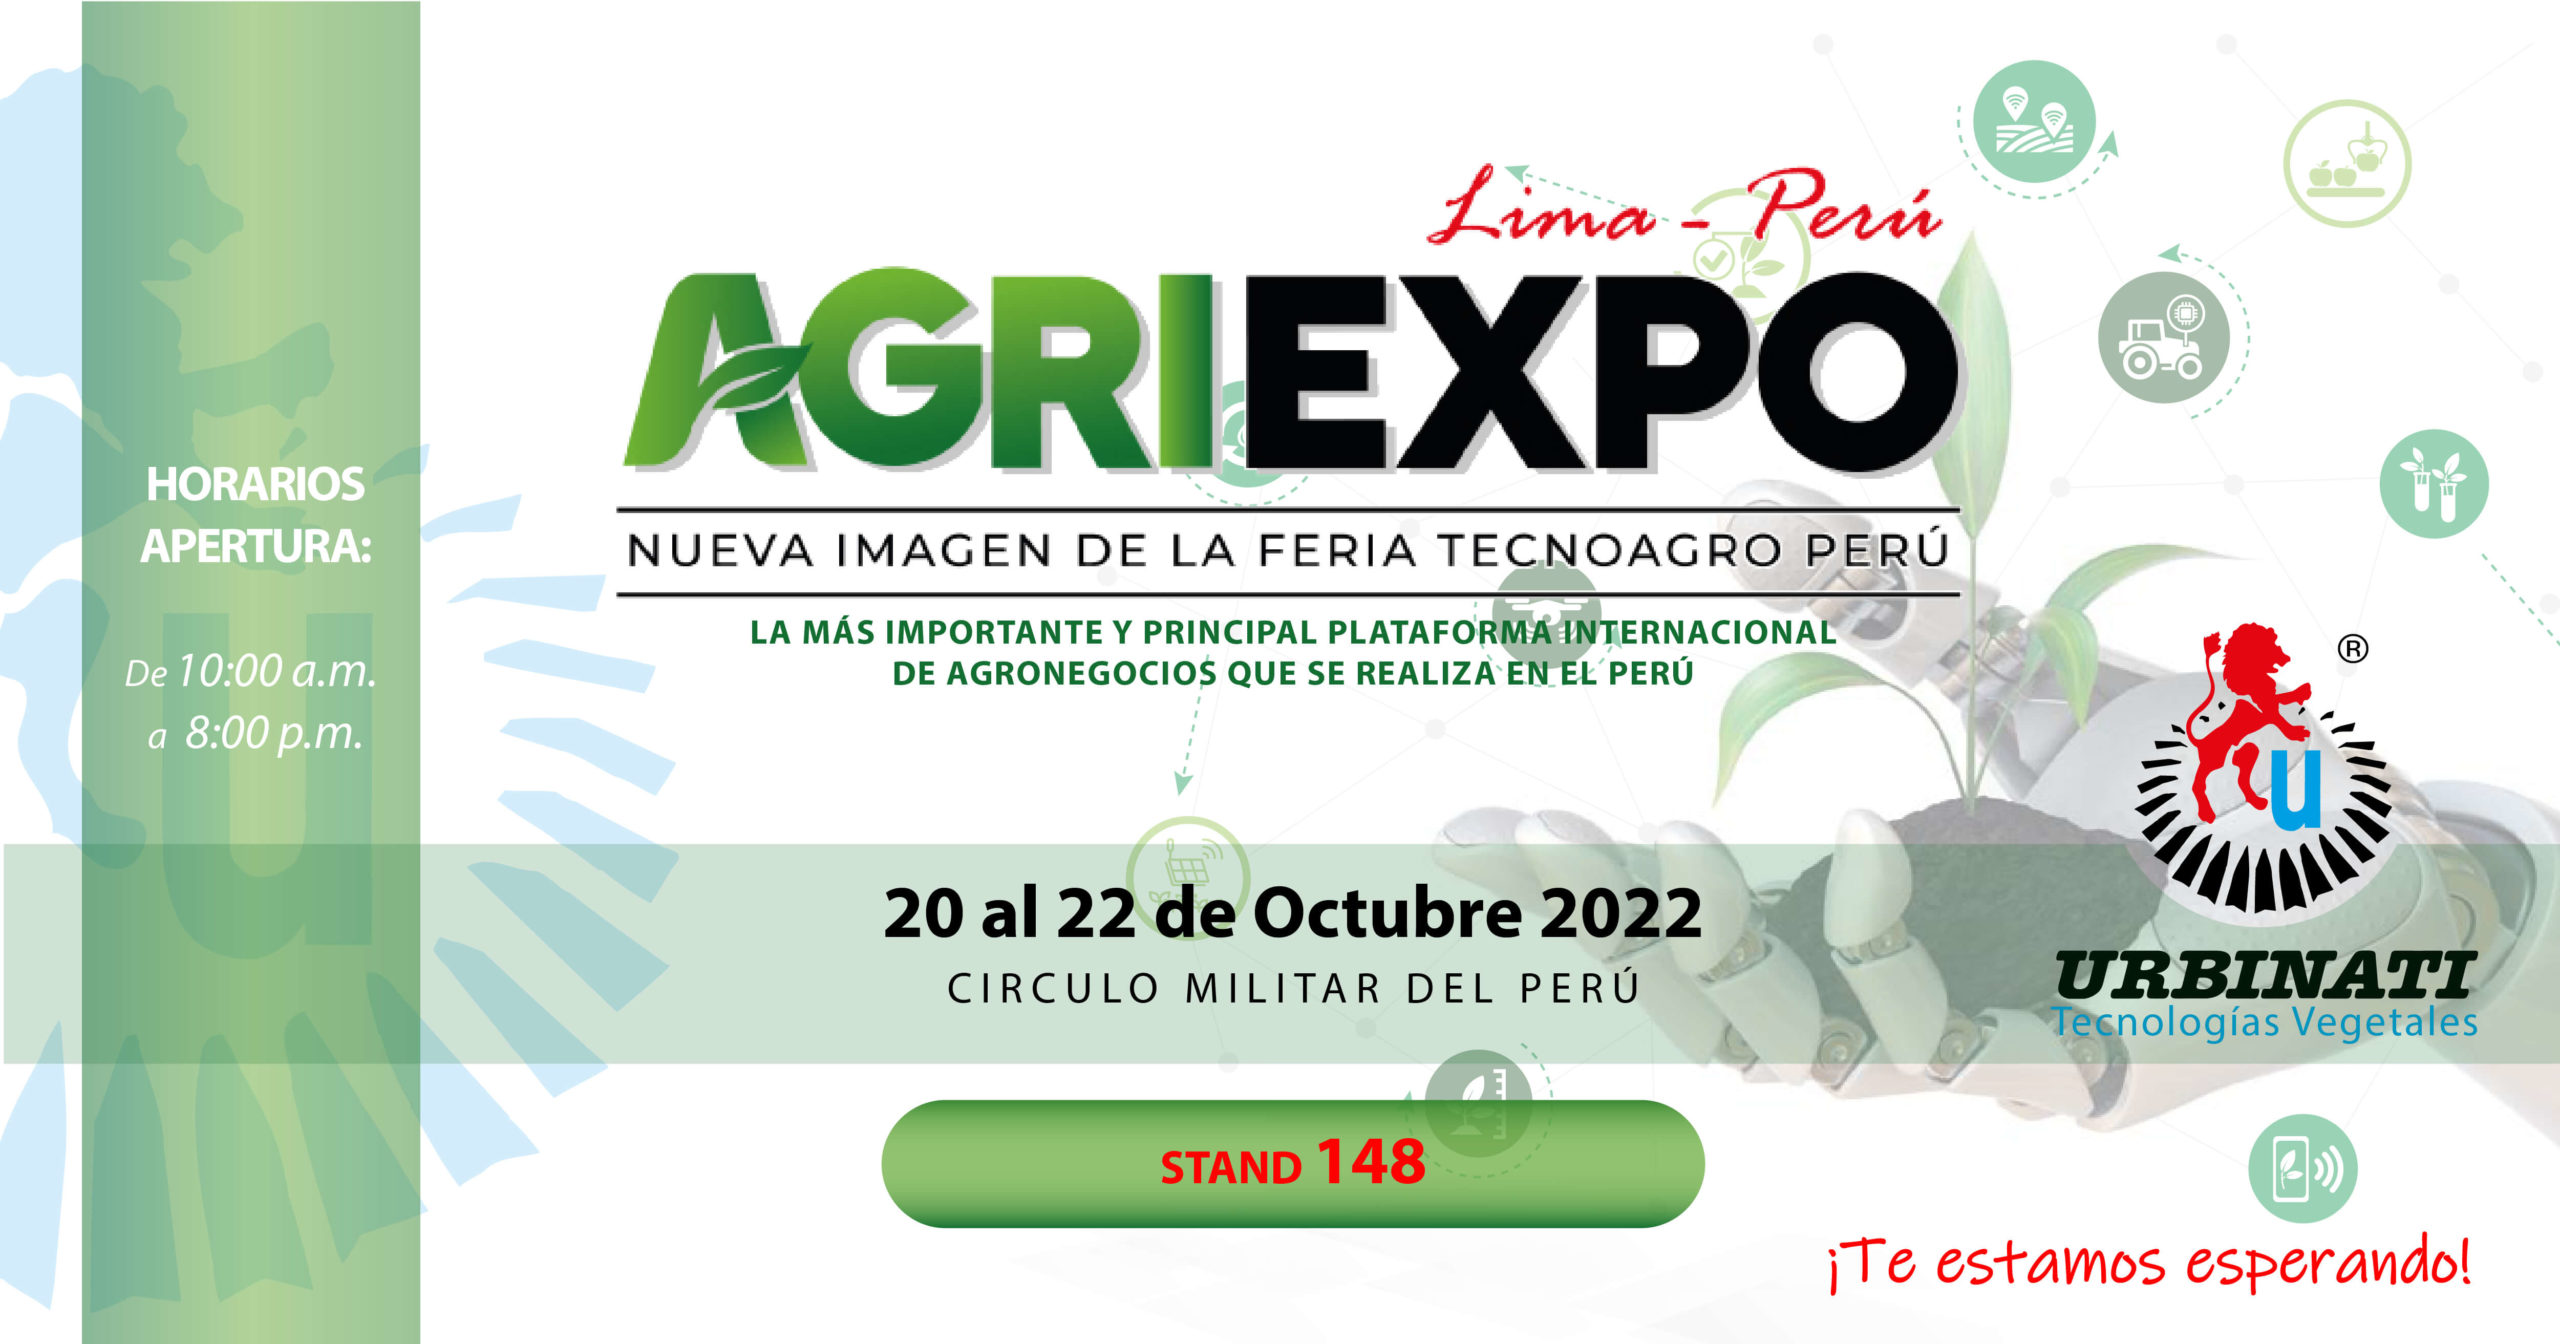 Invitation fair AGRIEXPO 20-22 of October 2022 Peru